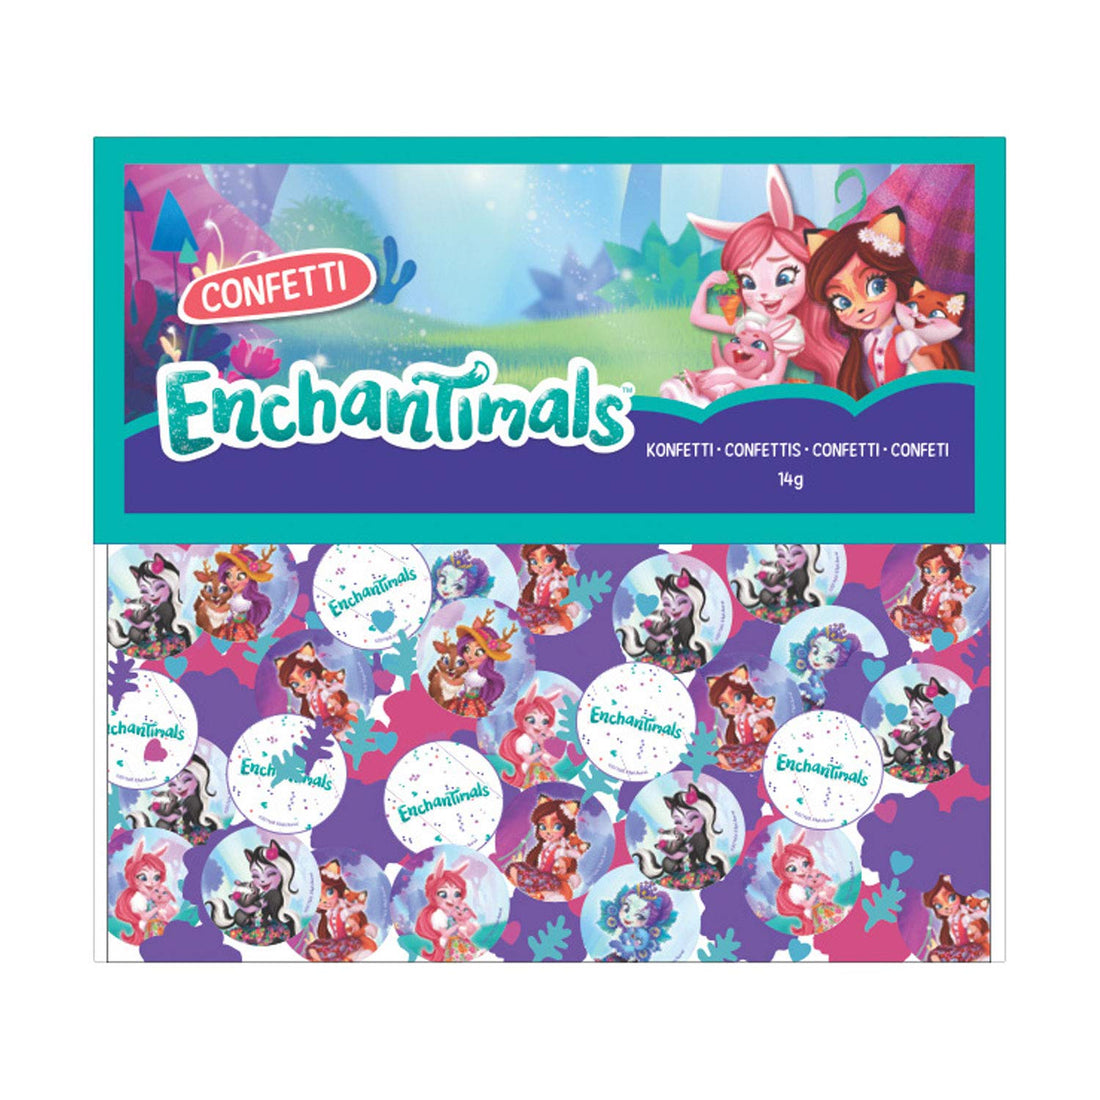 Enchantimals Colorful Confetti